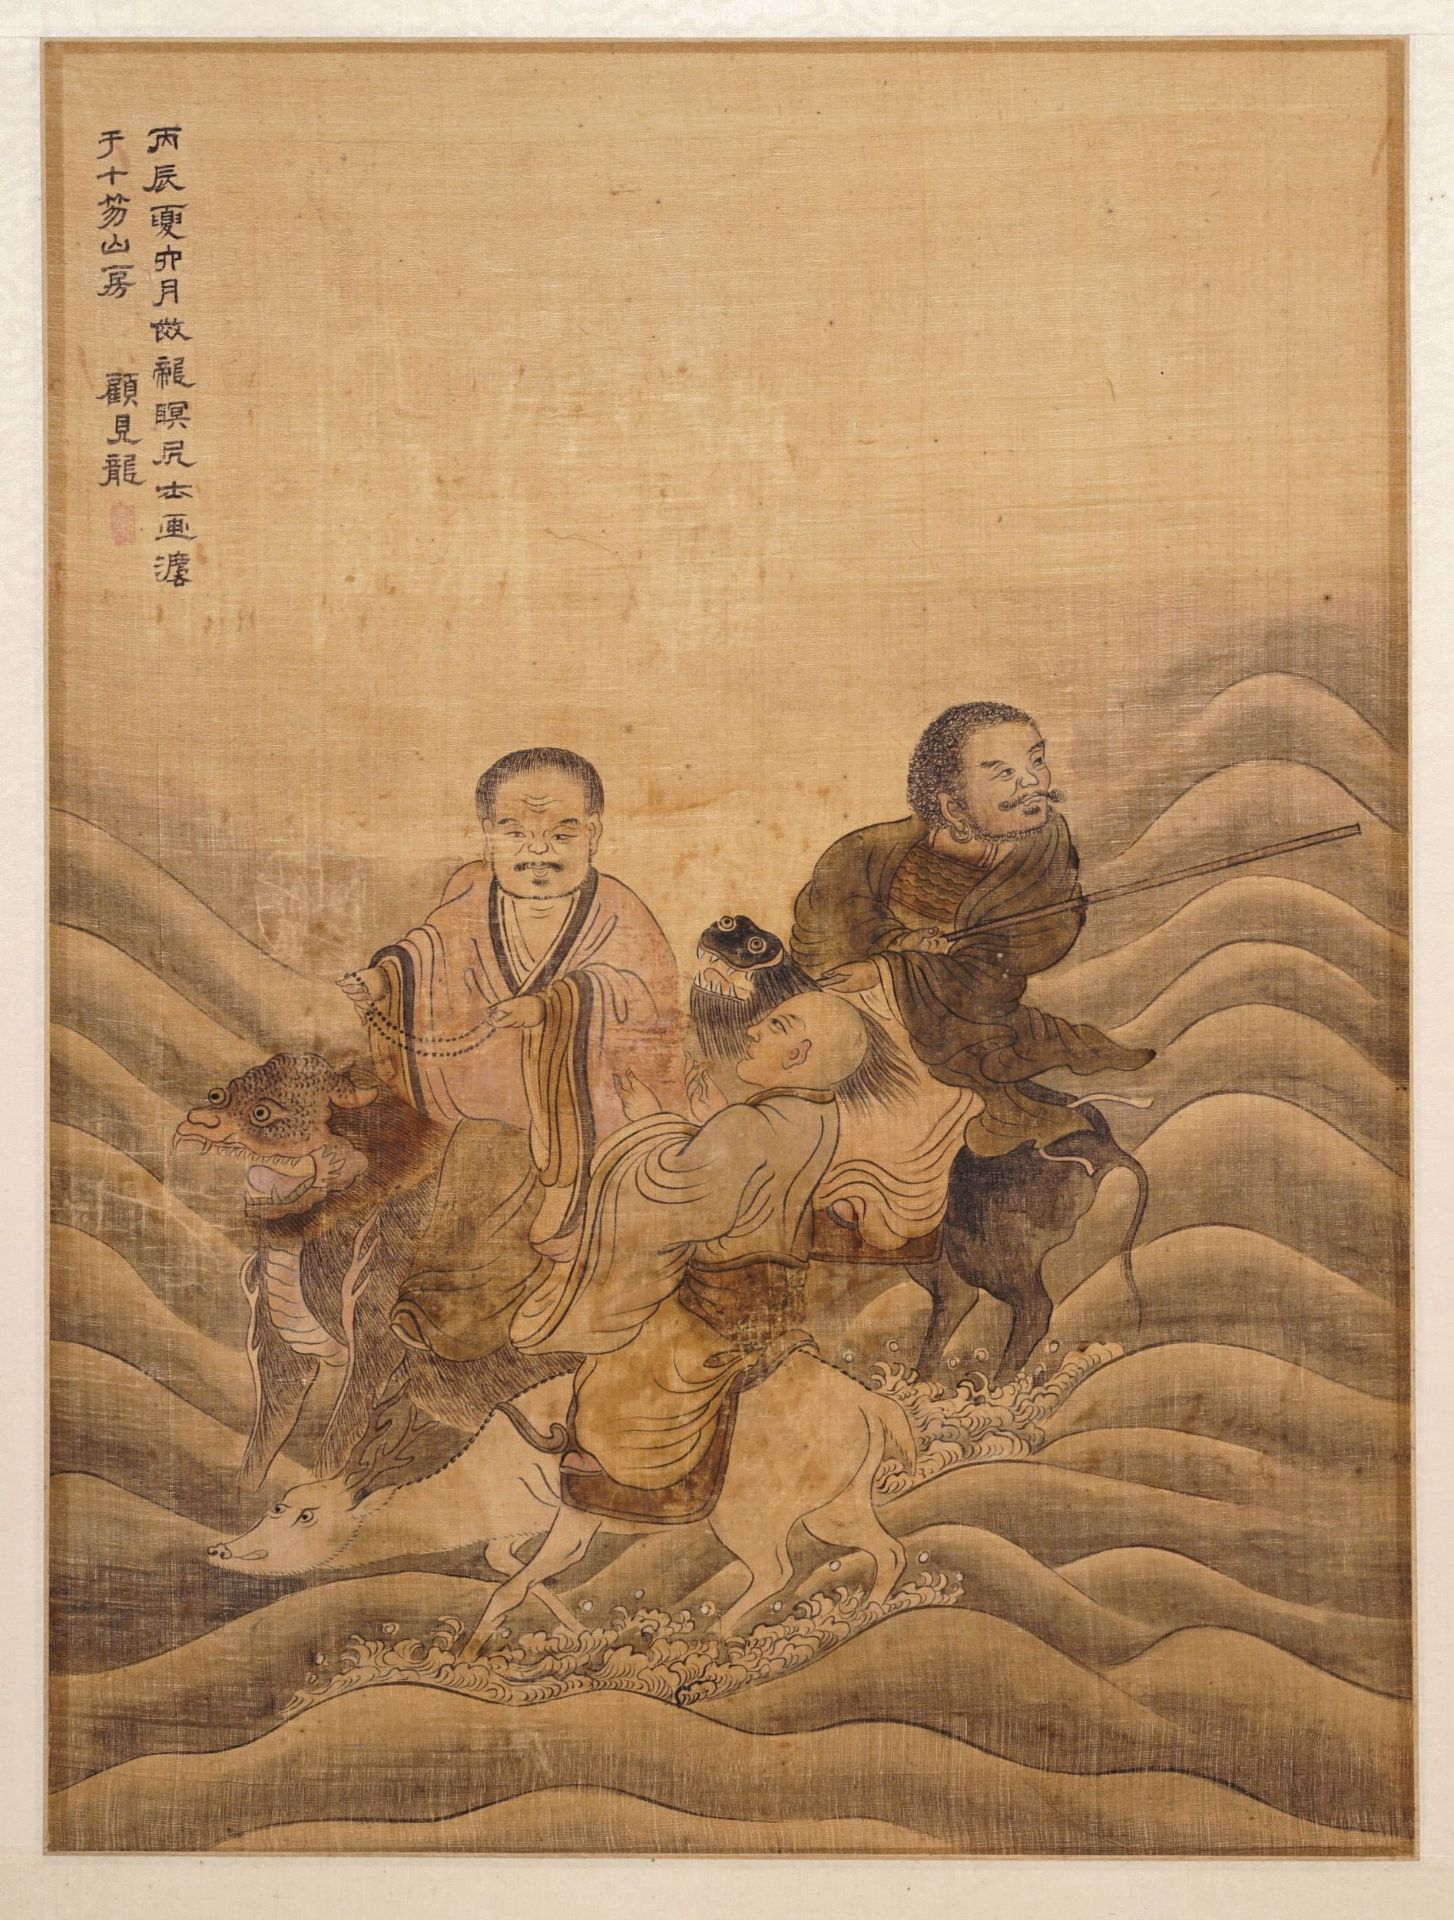 Gu Jianlong (nach), Drei Luohan. China. Wohl späte Qing-Dynastie. 18./19. Jh.